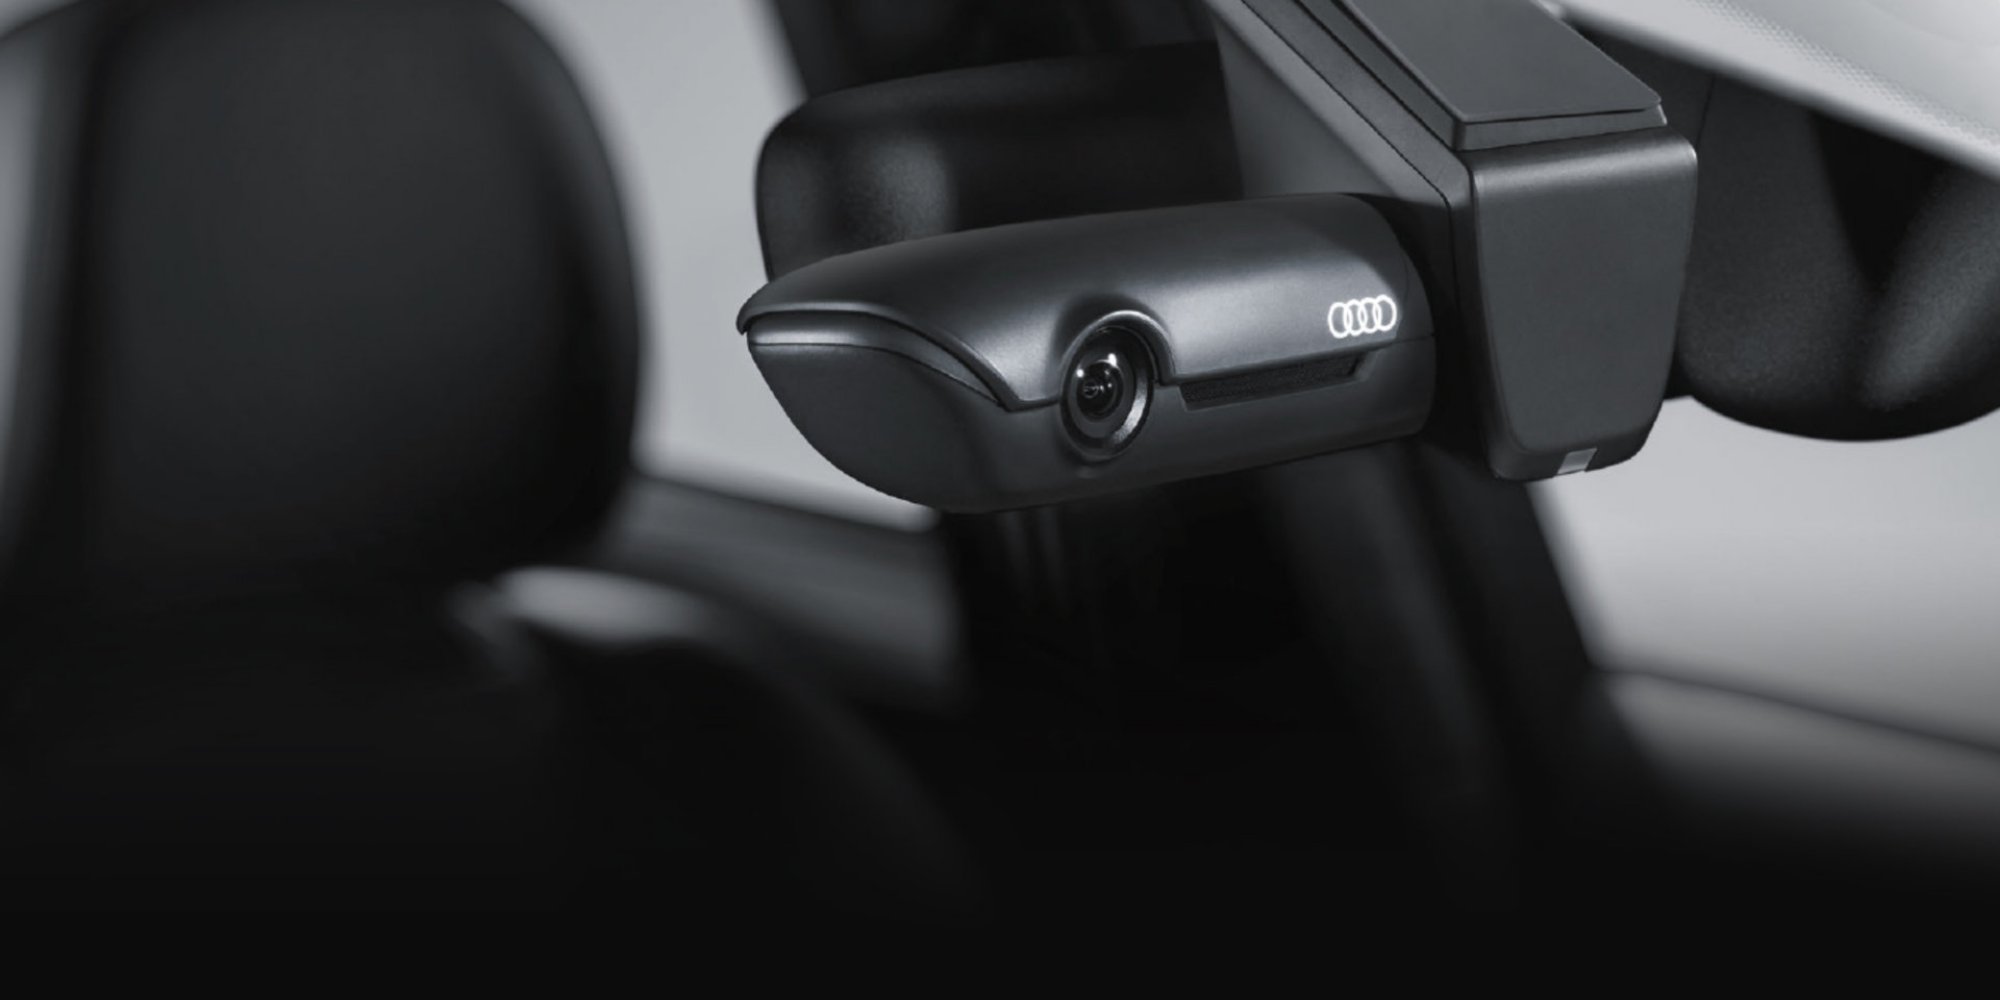 News - Audi Australia Releases Its Own Dashcam